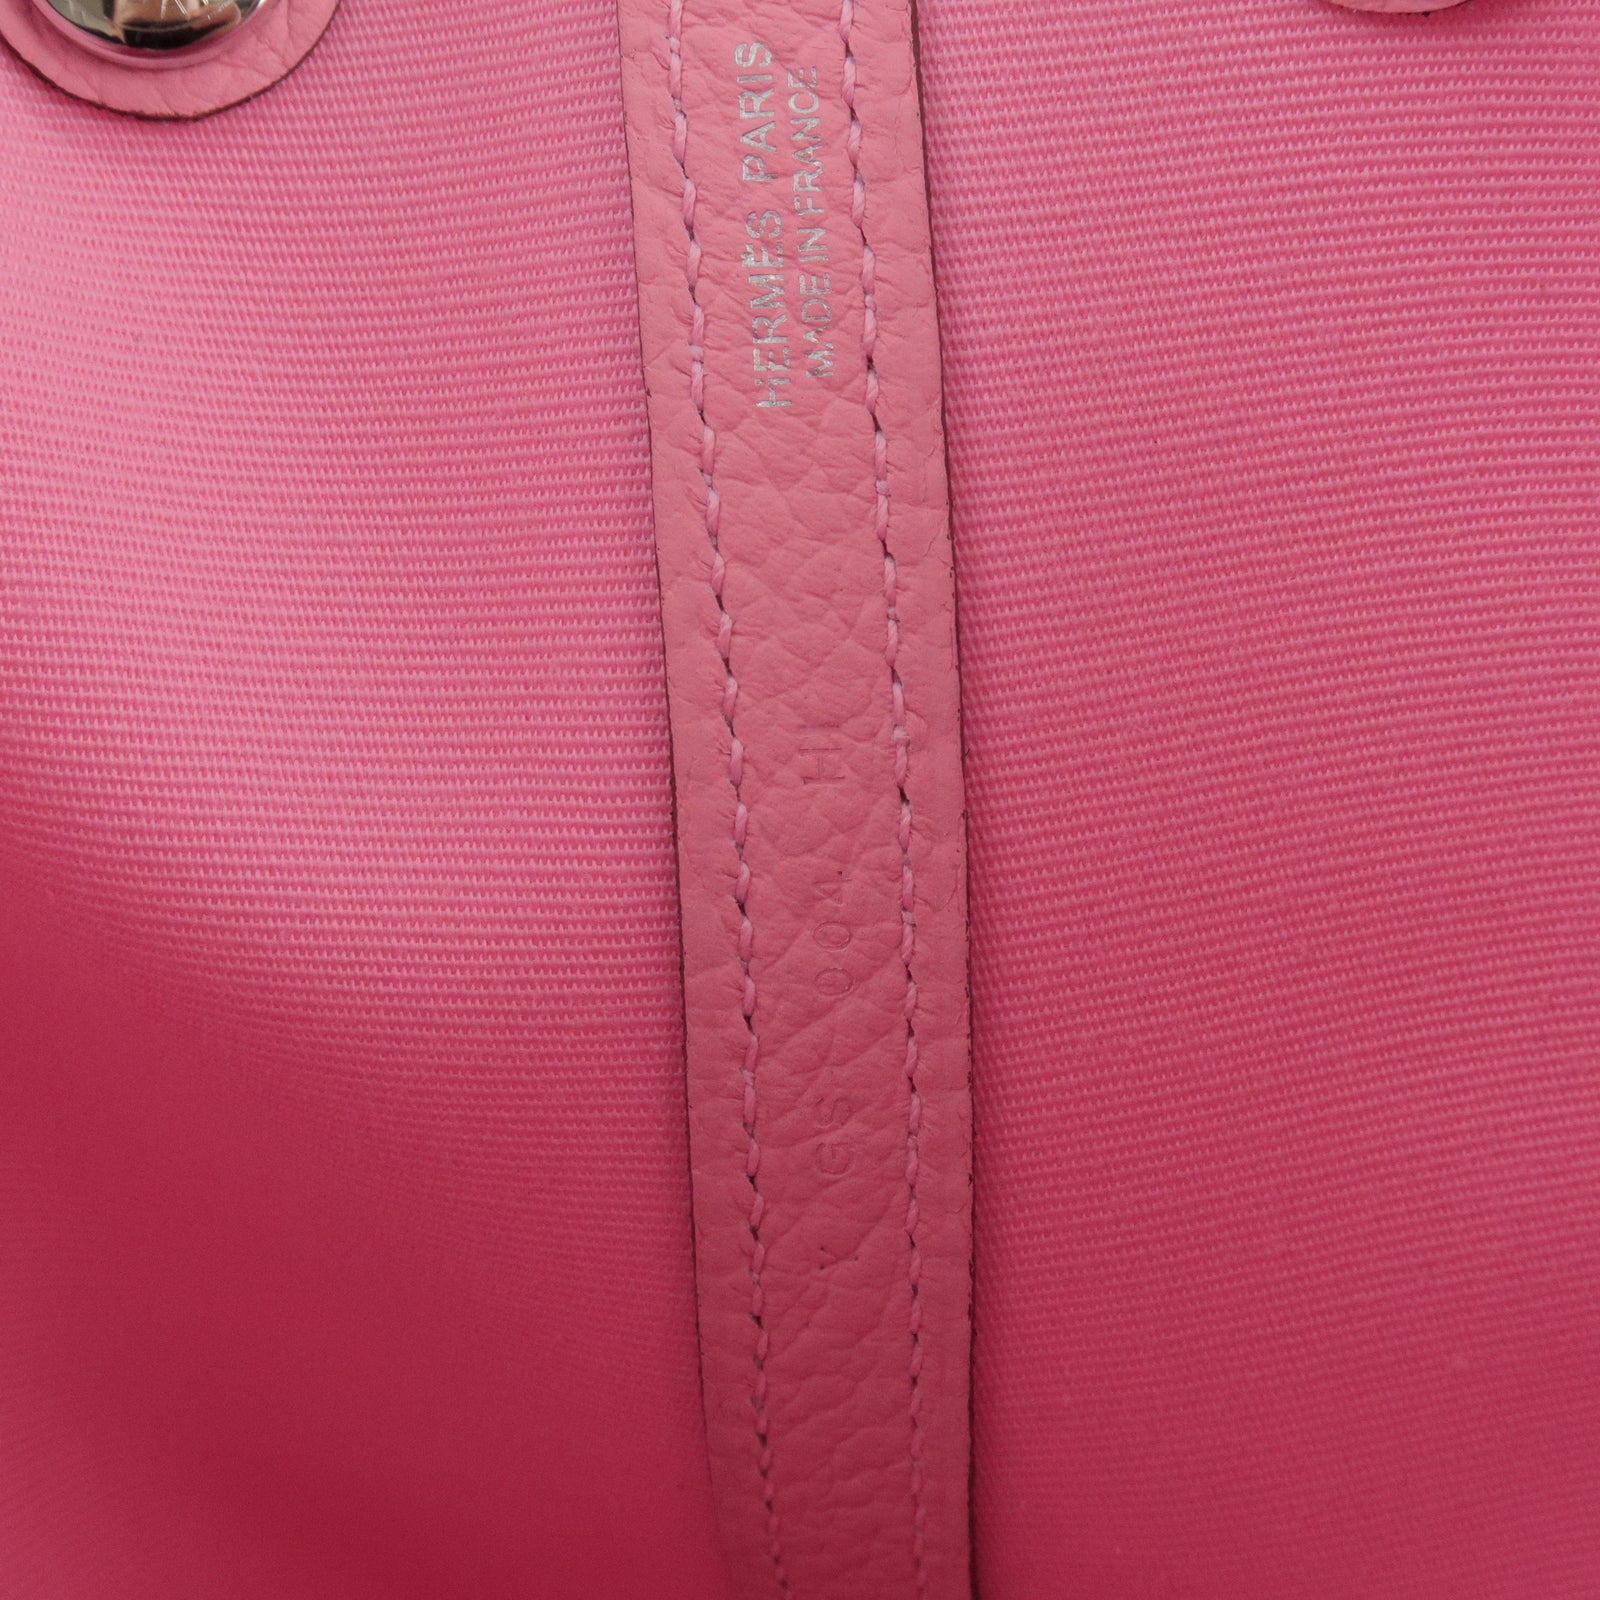 Hermes Pink Rose Sakura Leather 36 Garden Party Handbag